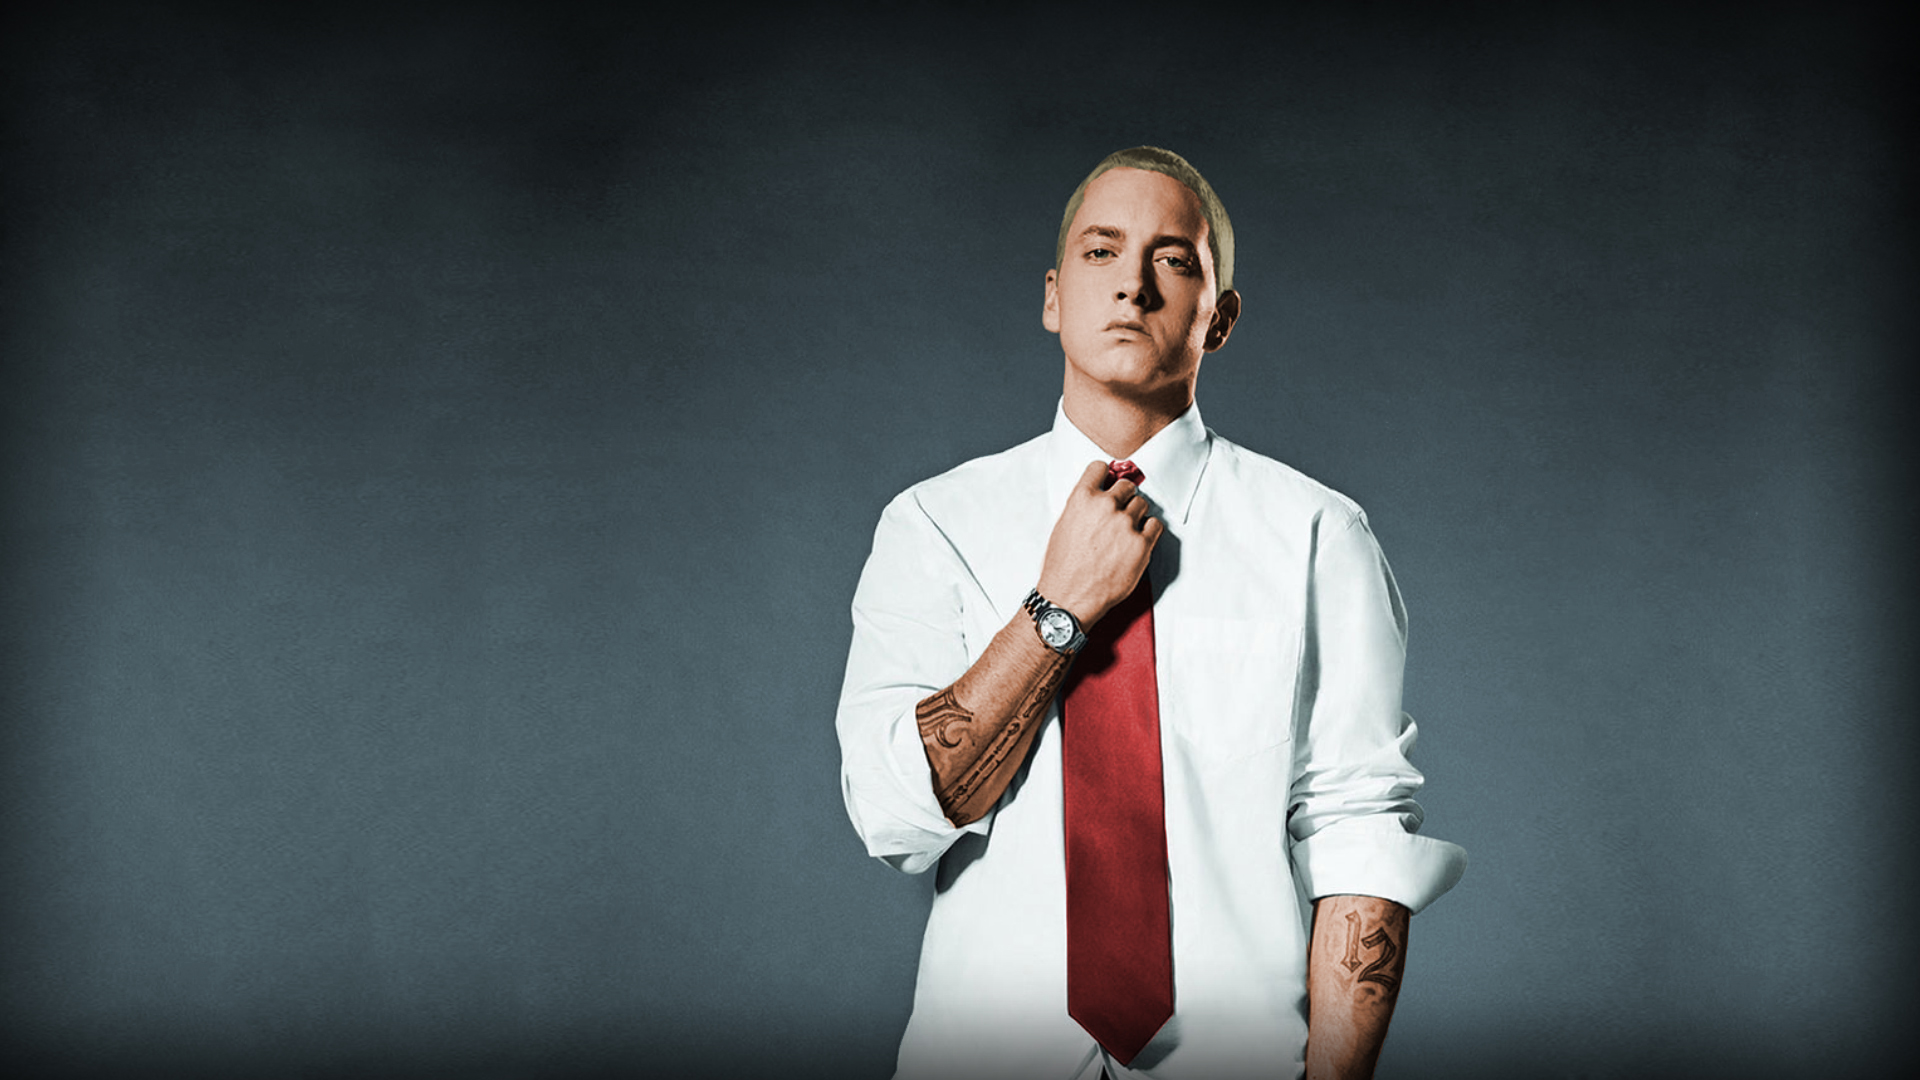 Eminem y Dr Dre recuerdan cómo nació “My Name Is” en The Defiant Ones. Cusica Plus.